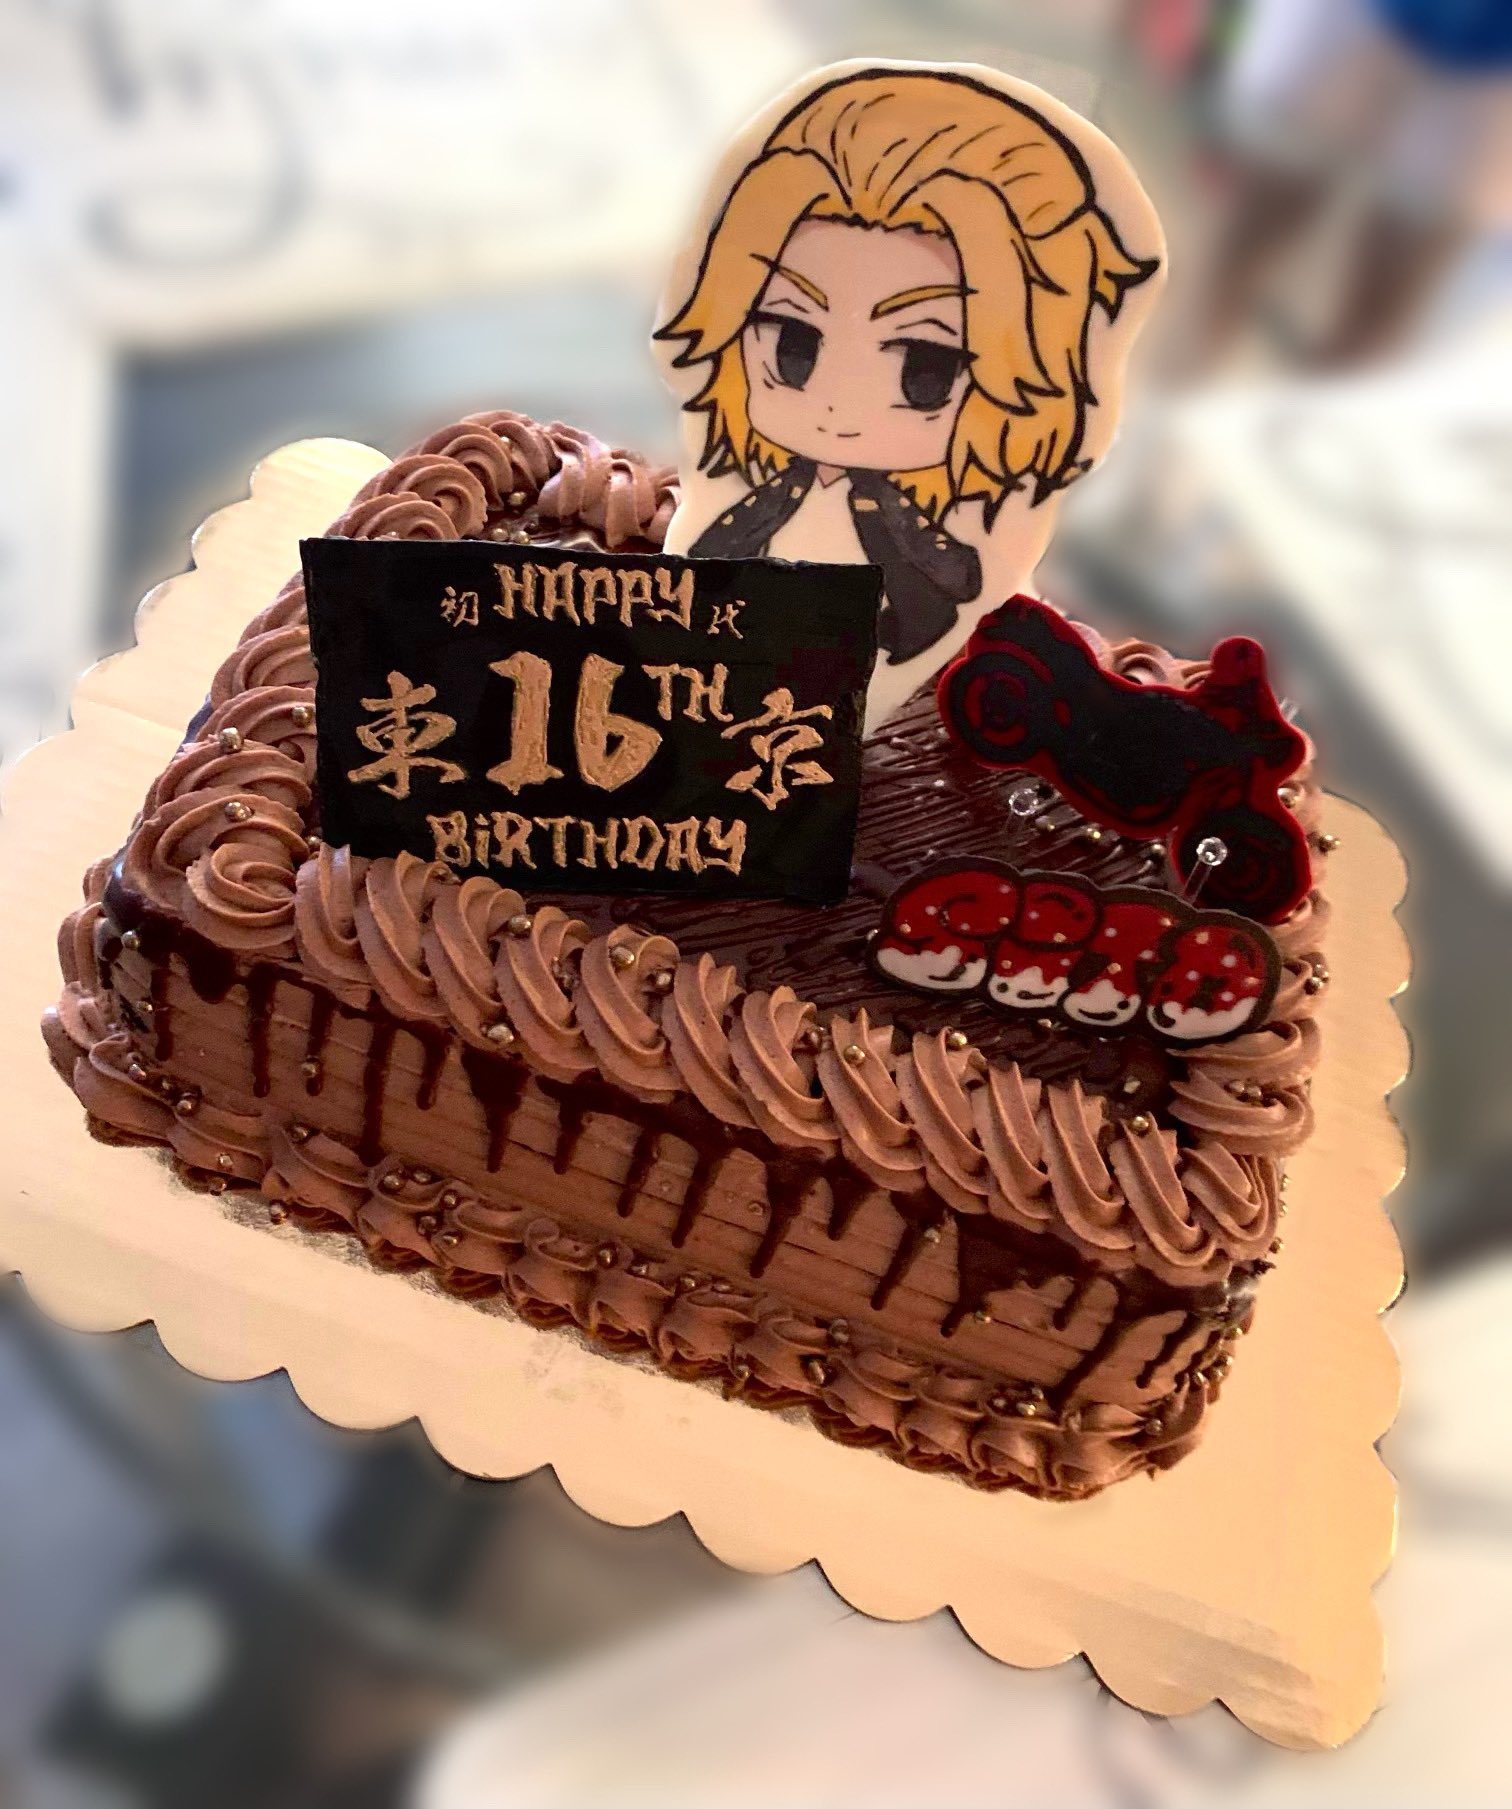 Haikyu! Anime Cake, A Customize Anime cake